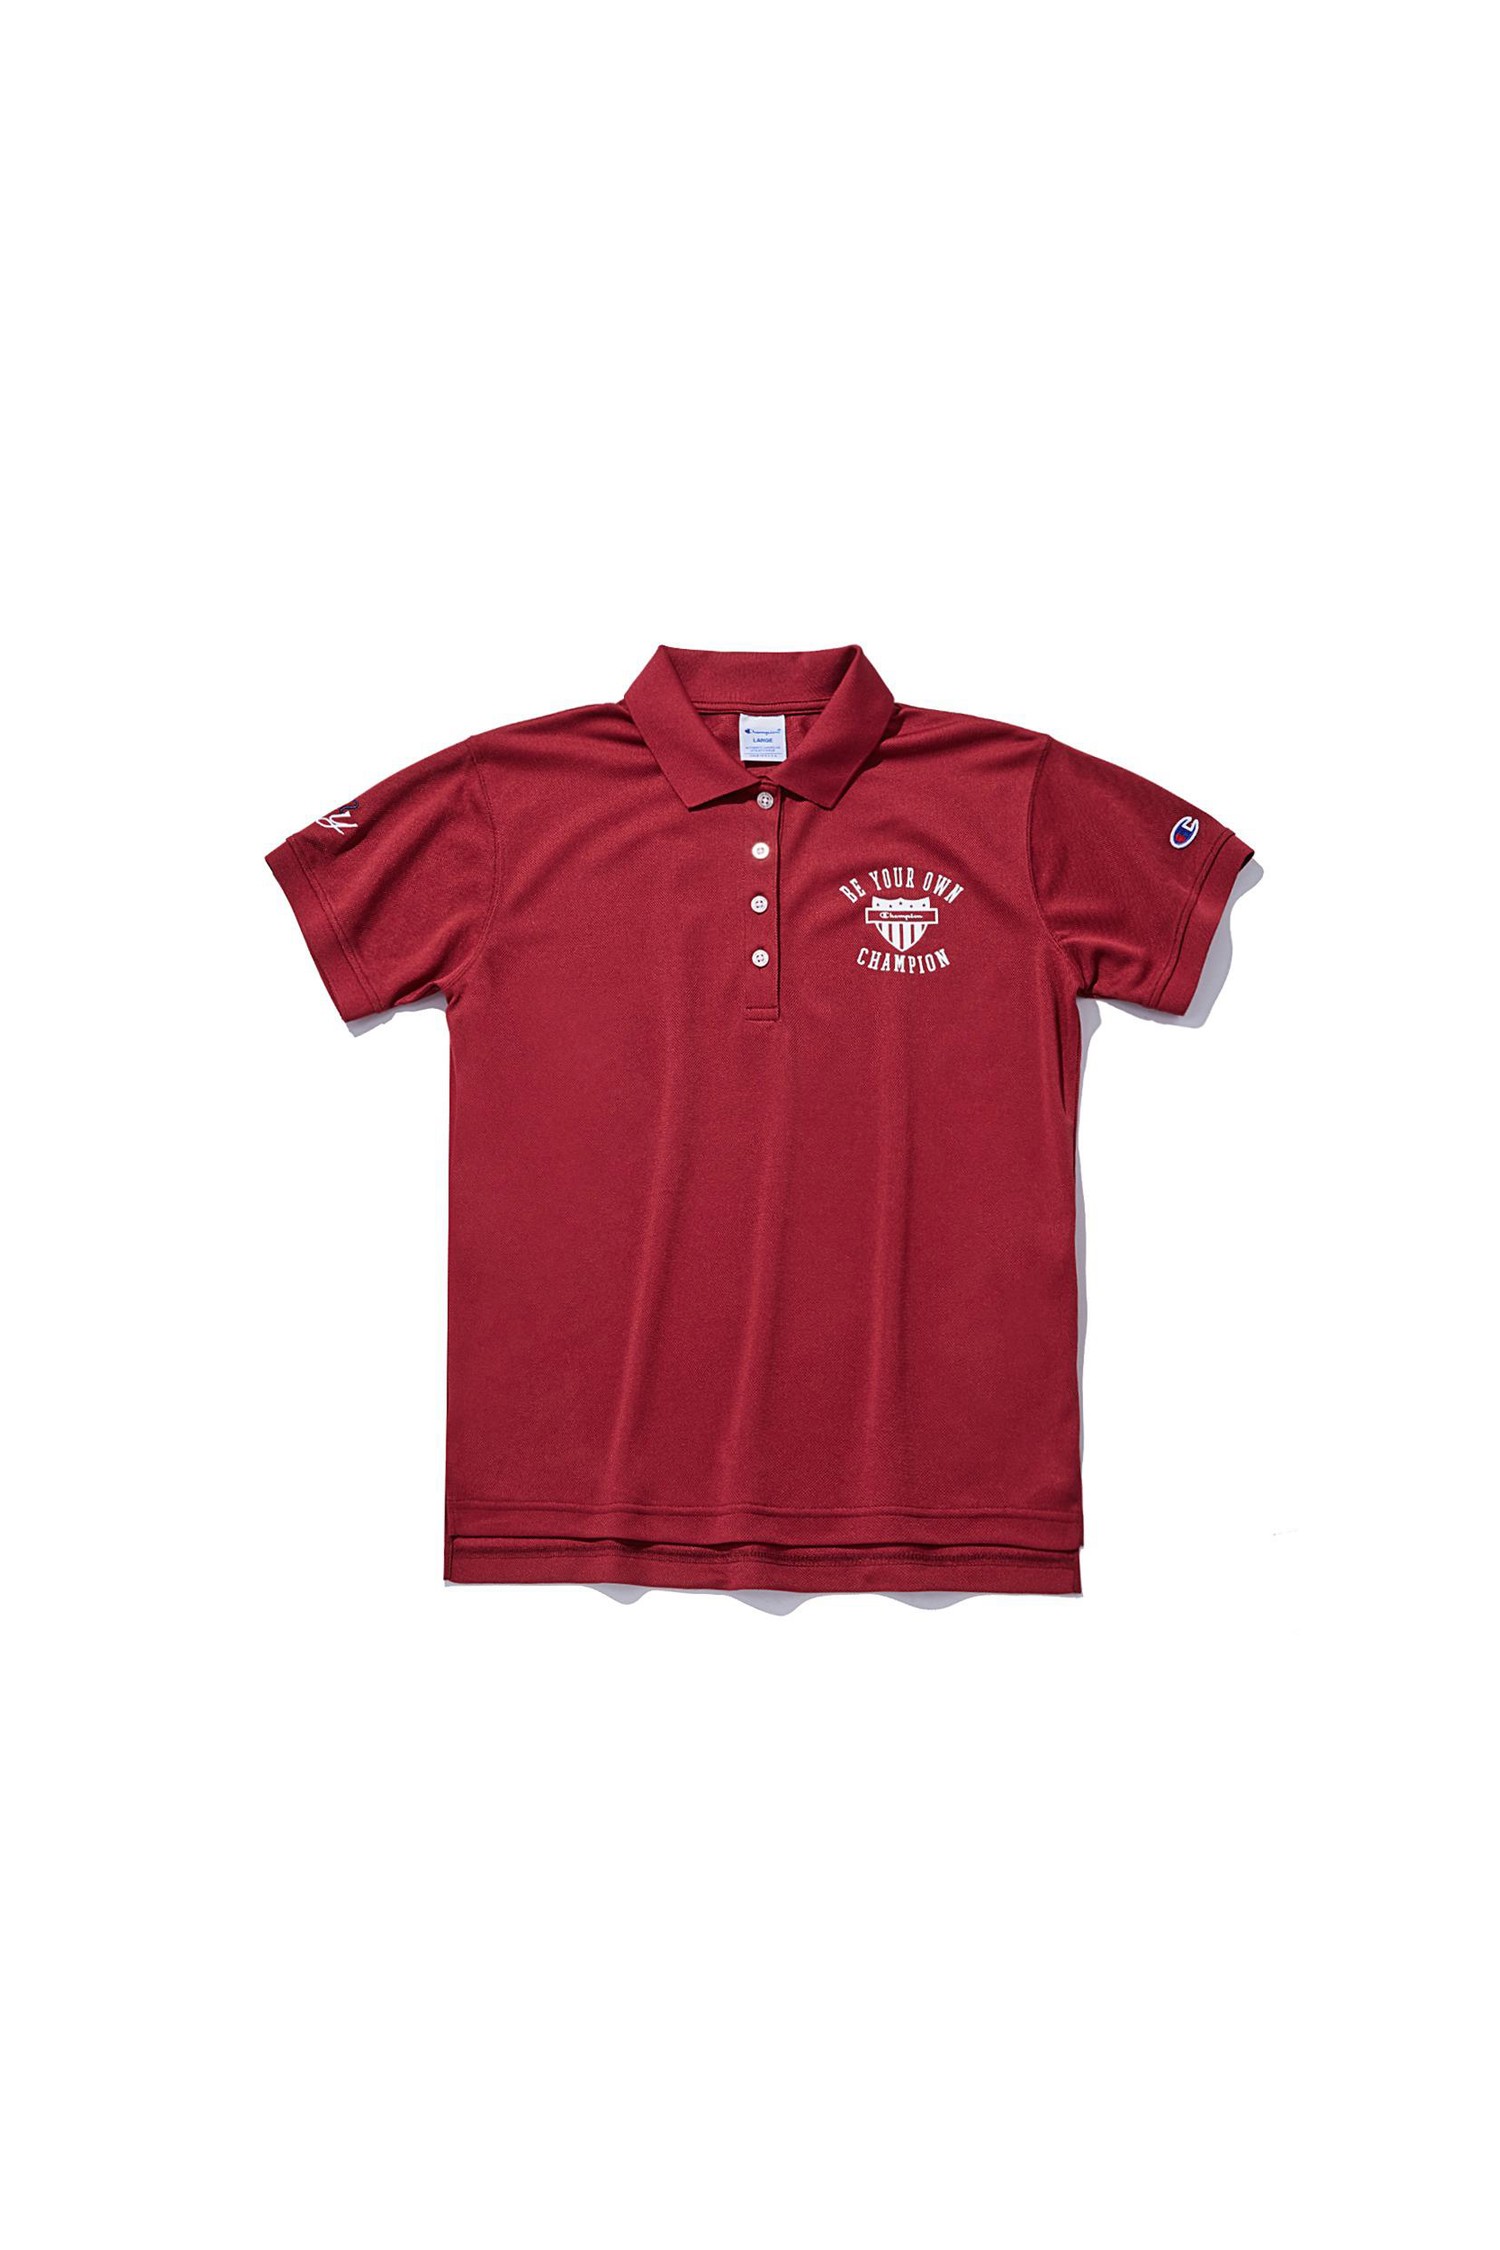 ASIA] Golf 여성 프린트 피케 폴로 티셔츠 (NORMAL RED 